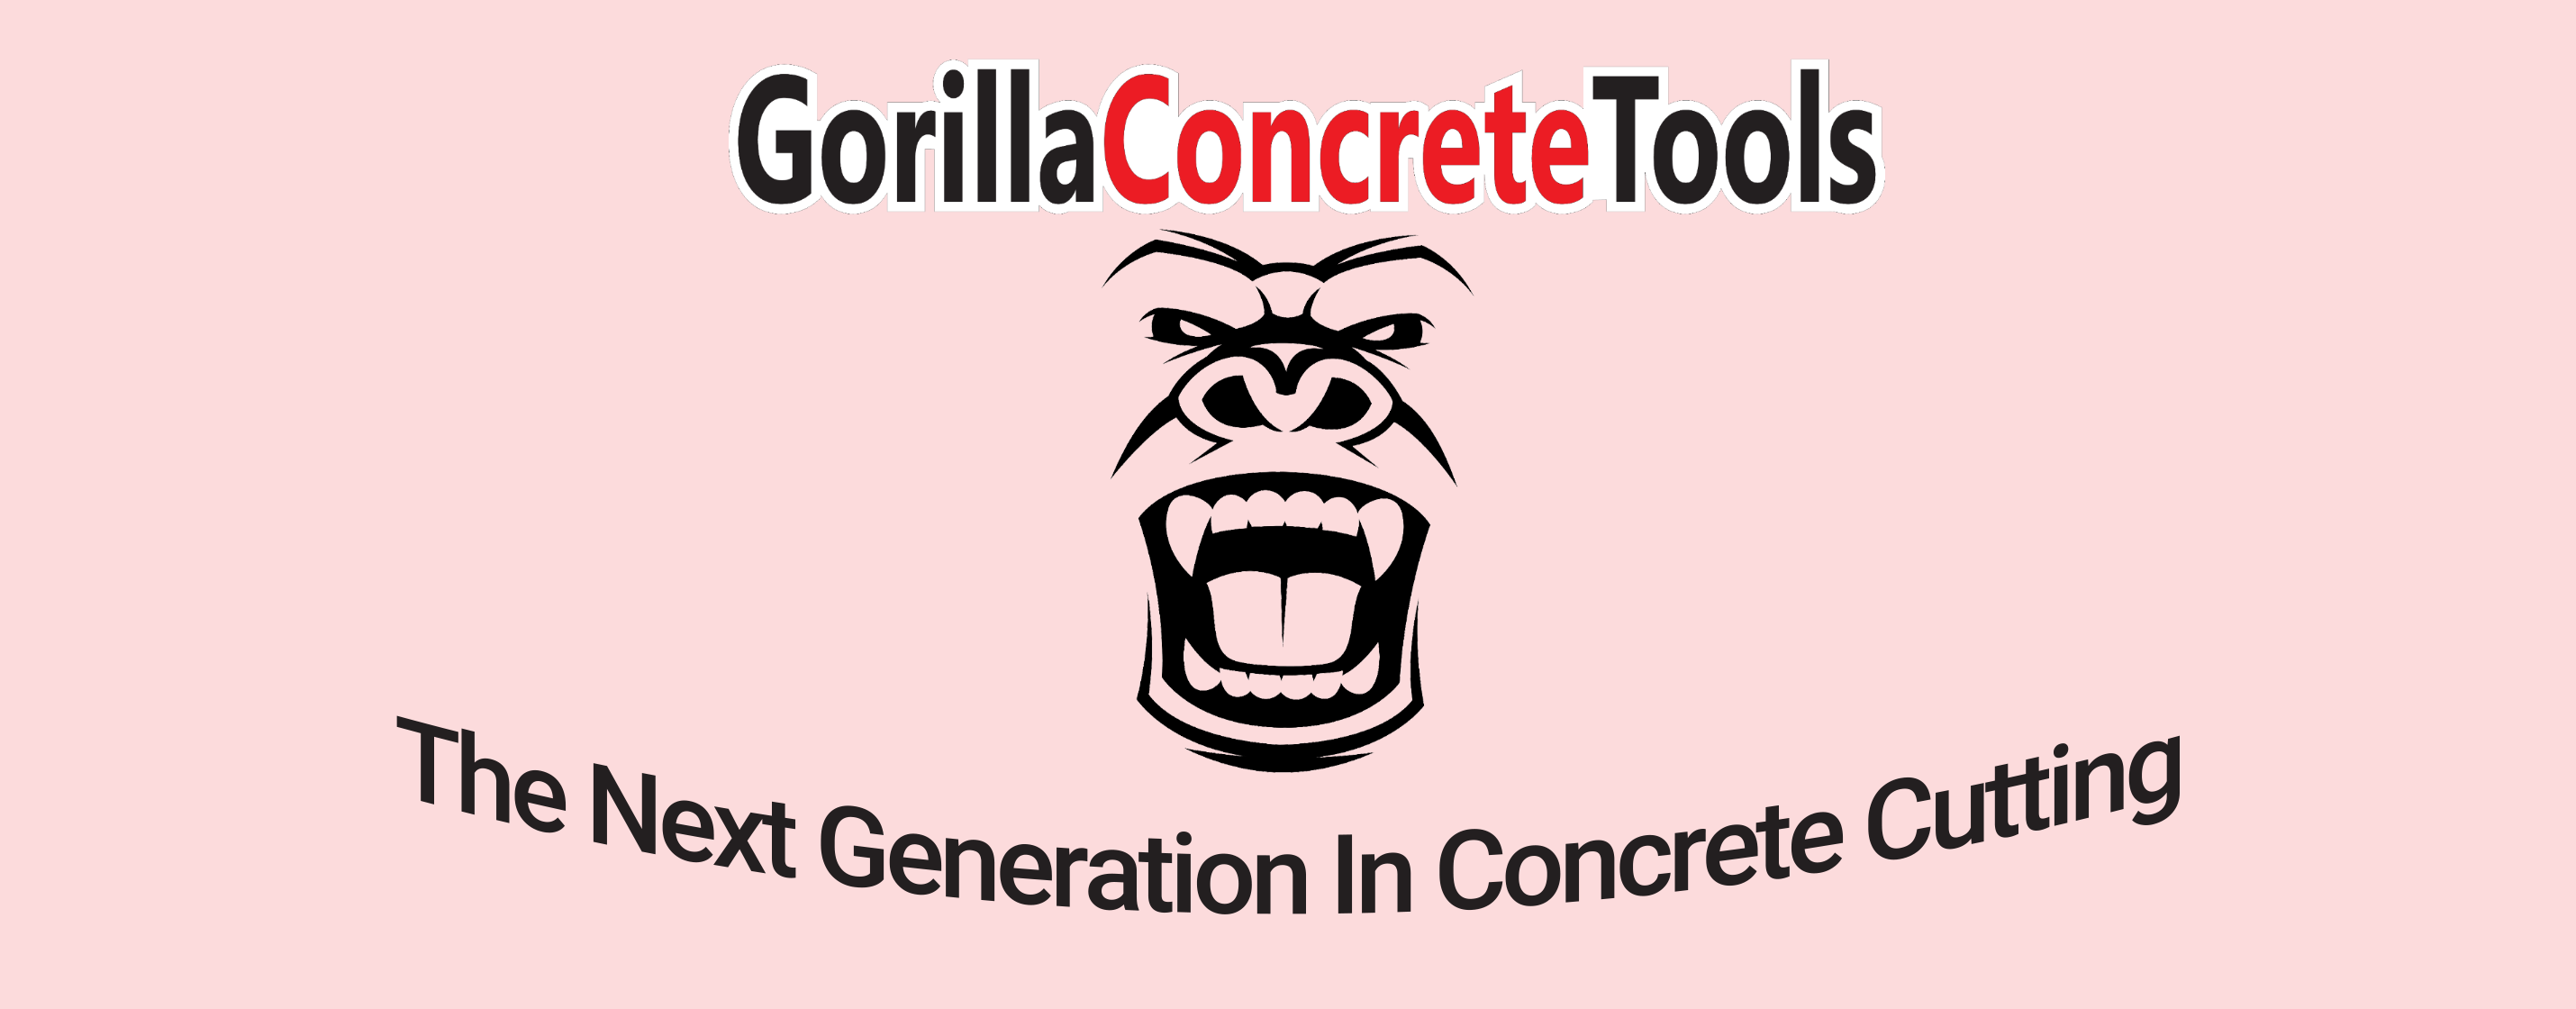 Gorilla_Concrete_Tools_Mobile_02a2249d-27a4-43bc-9e46-130fc31c21b3.png